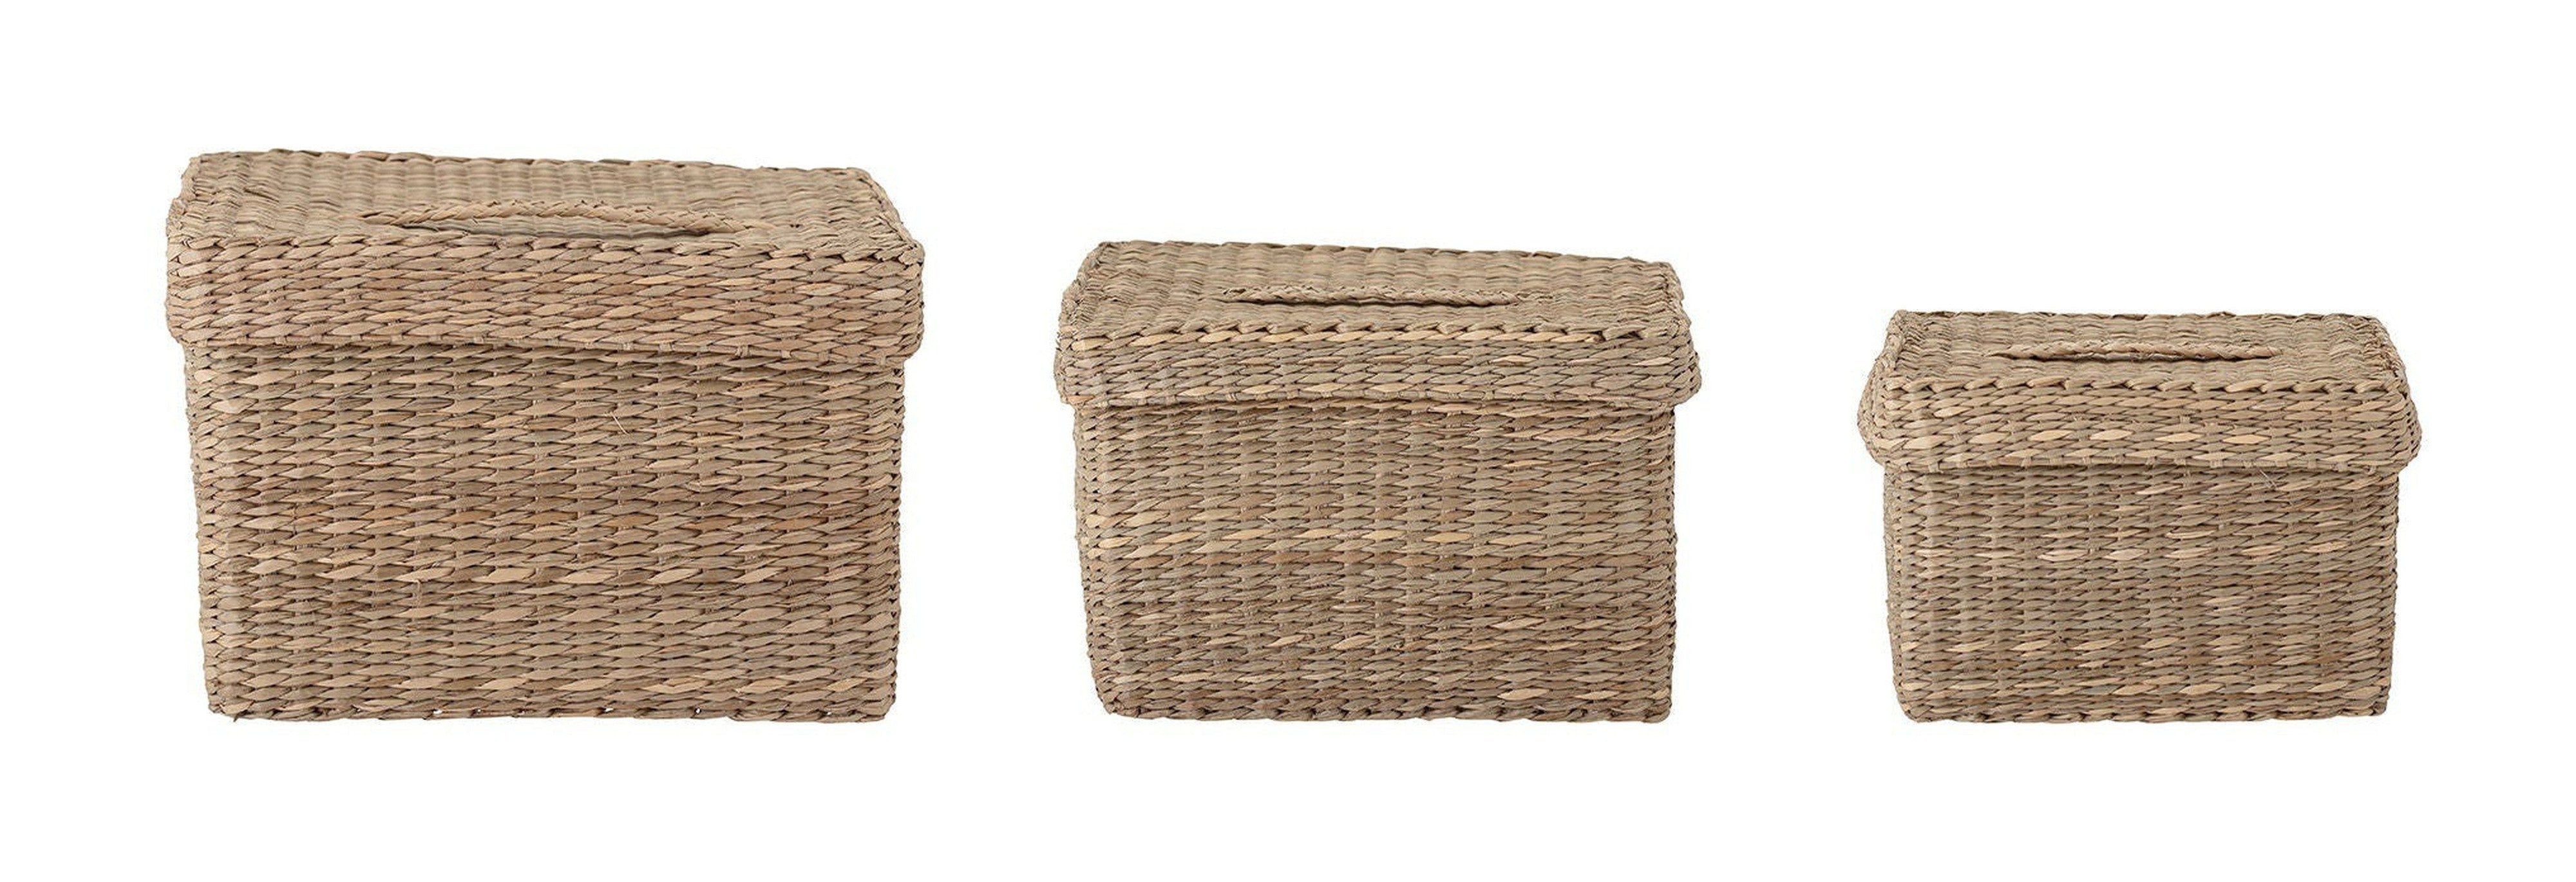 Bloomingville Givan Basket z pokrywką, przyrodą, trawę morską